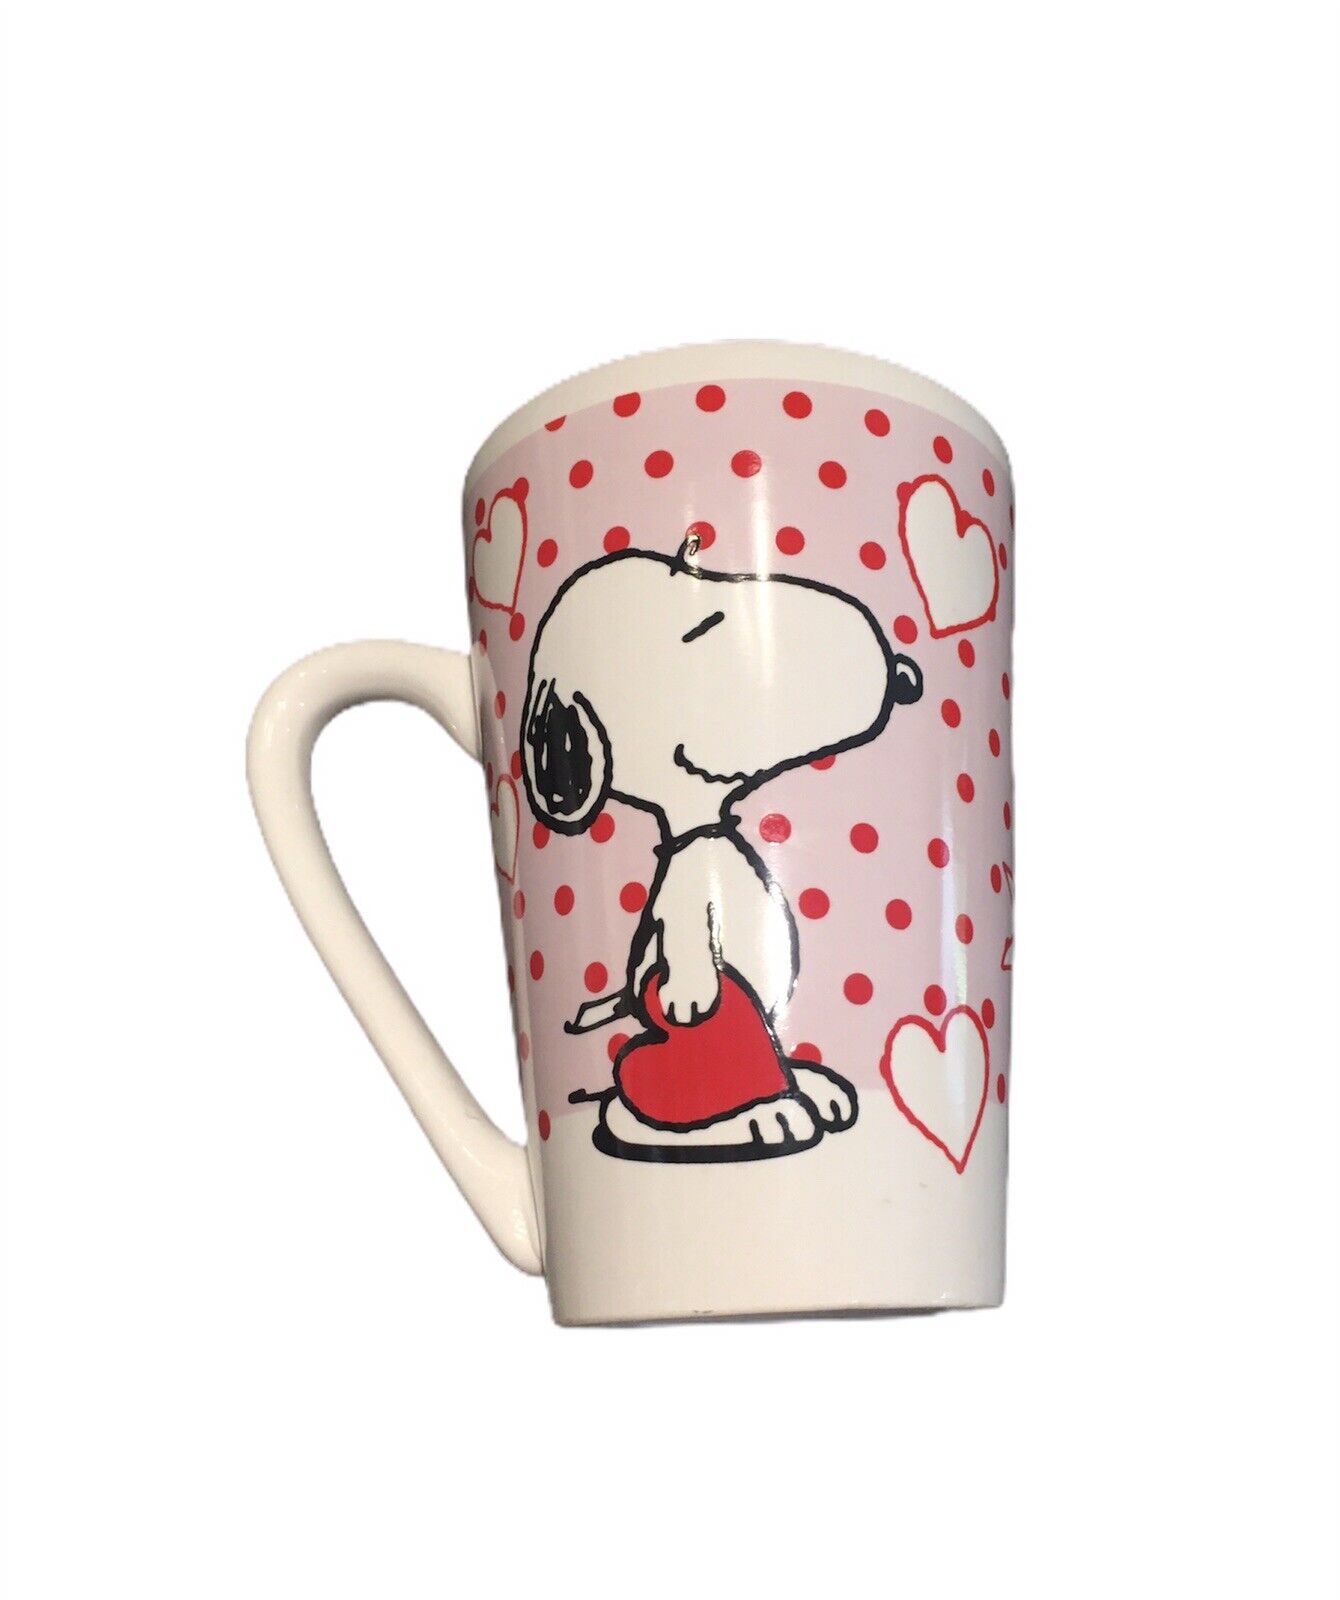 Snoopy And Woodstock Vaentines Day Tall Mug